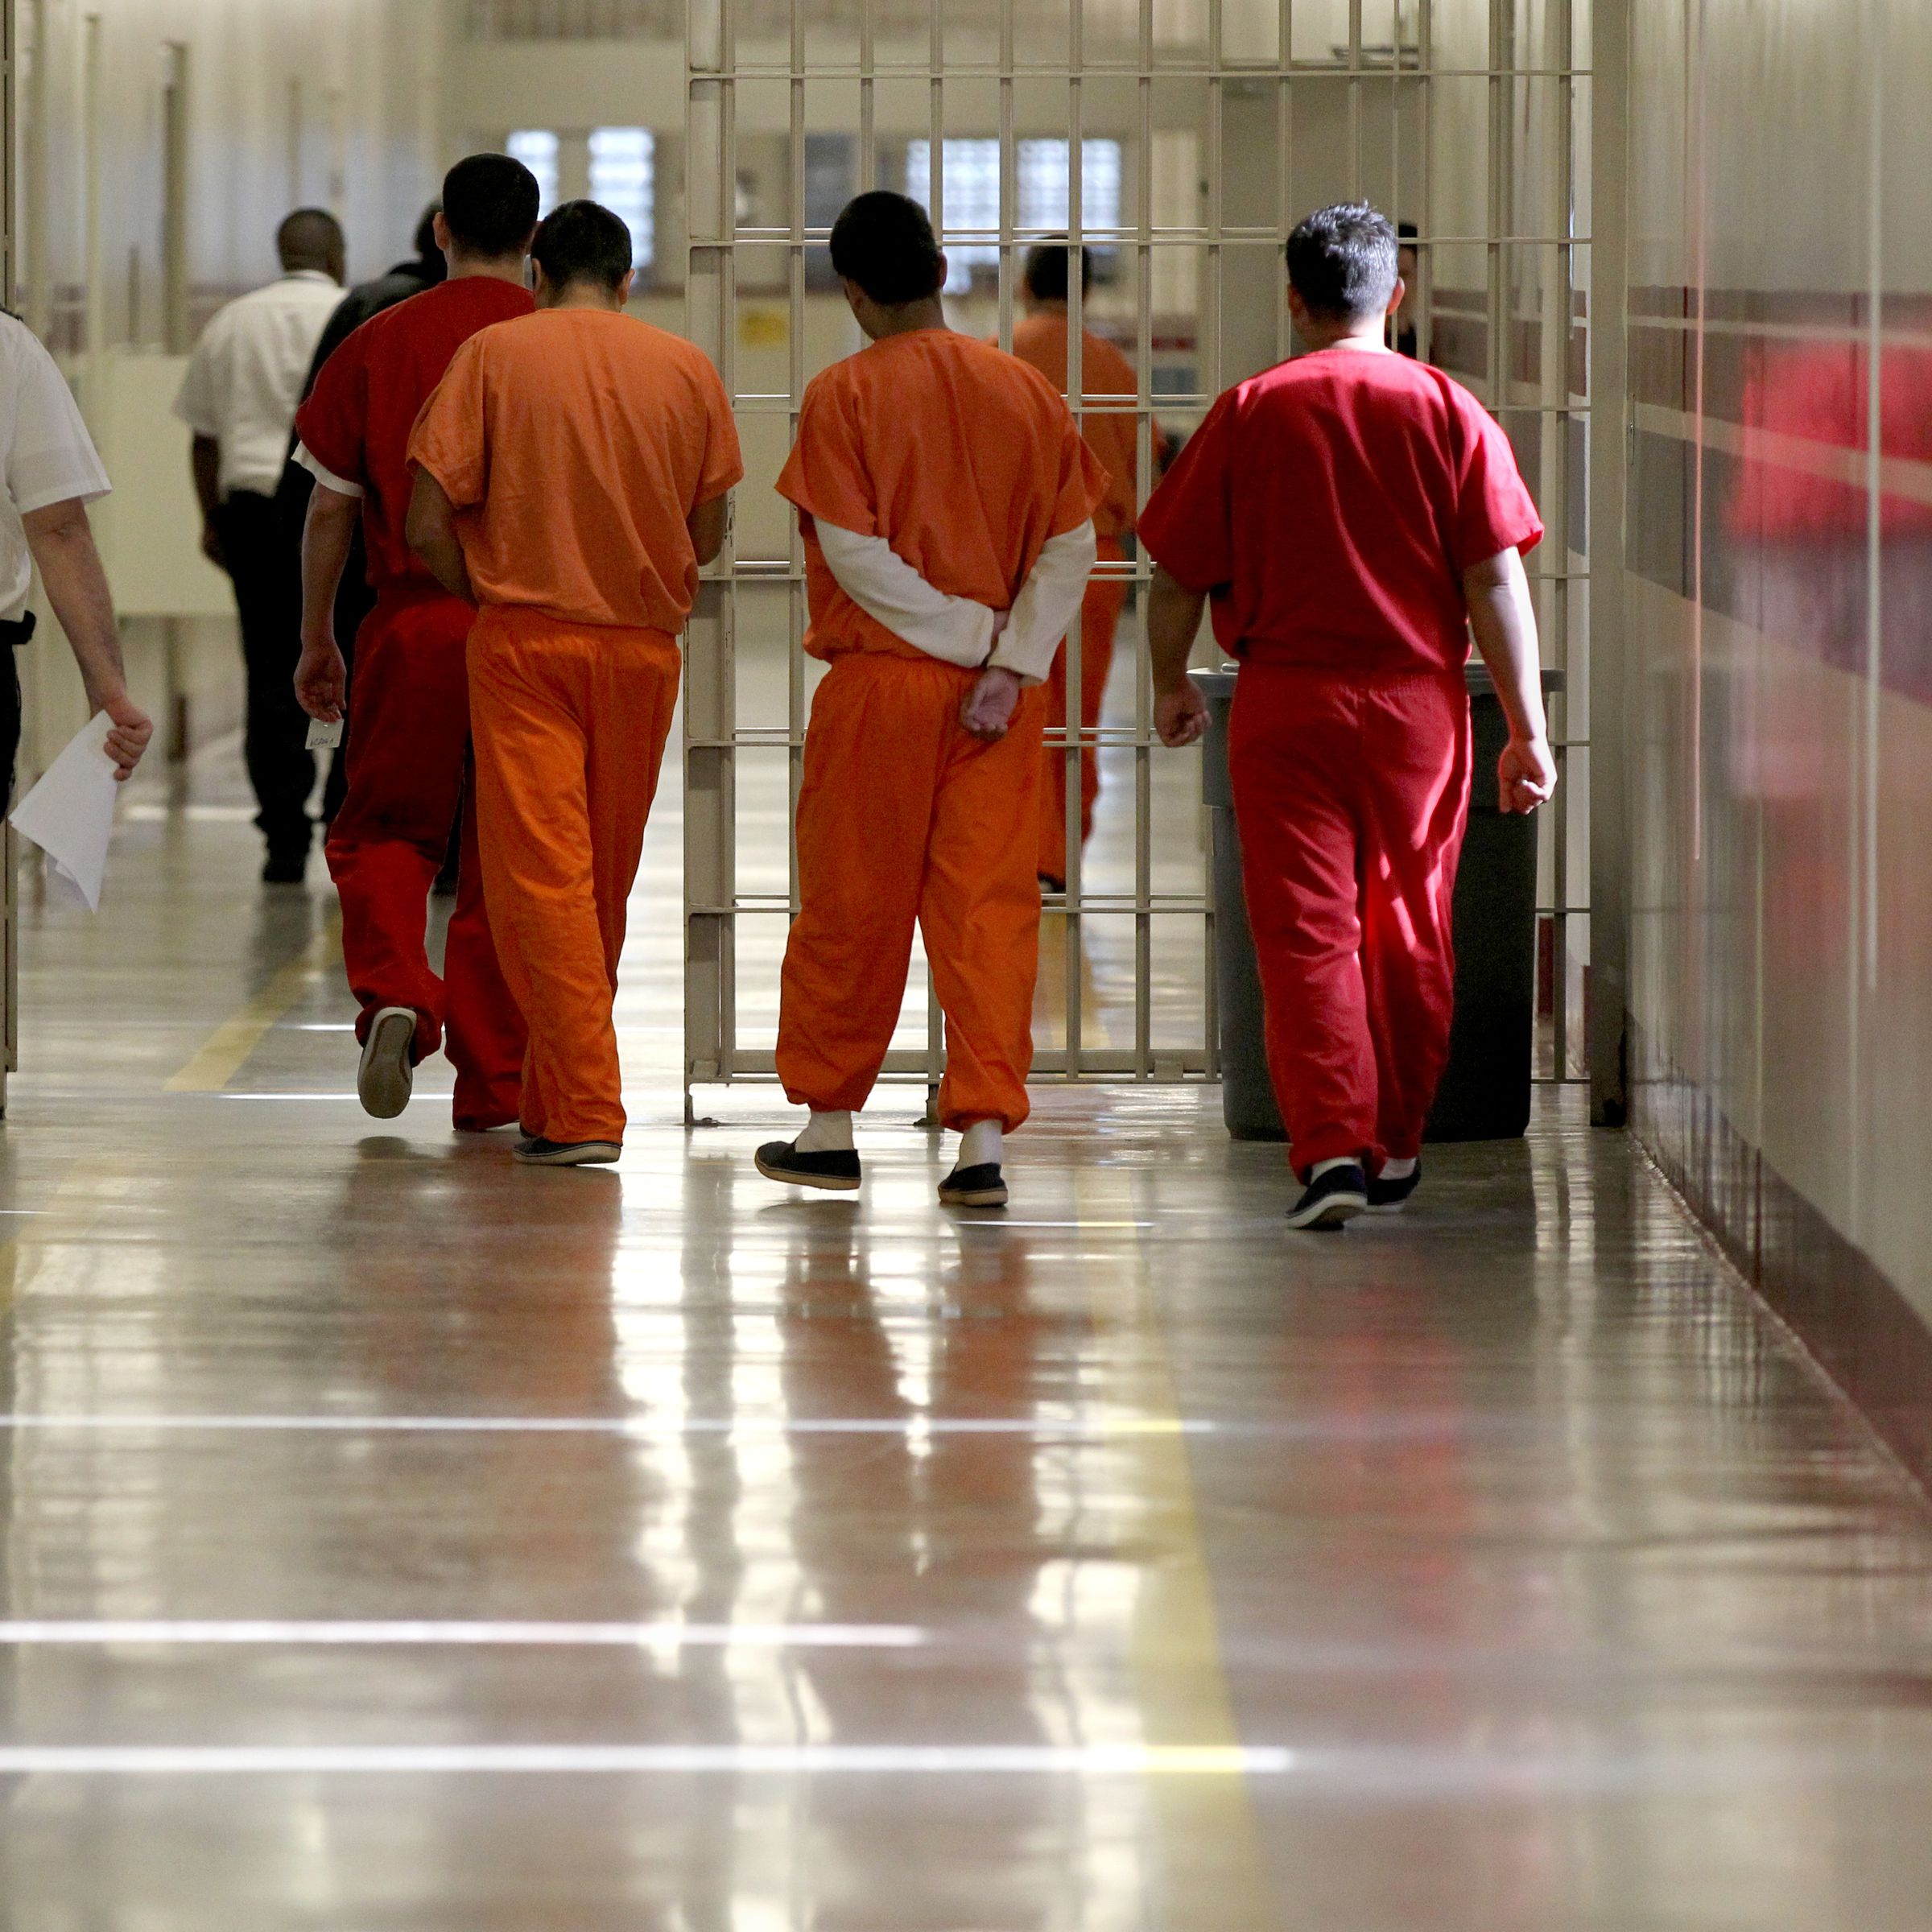 LUMPKIN, GA - MAY 4: Detainees at the Stewart Detention Center in Lumpkin, Ga. are escorted through a corridor. 